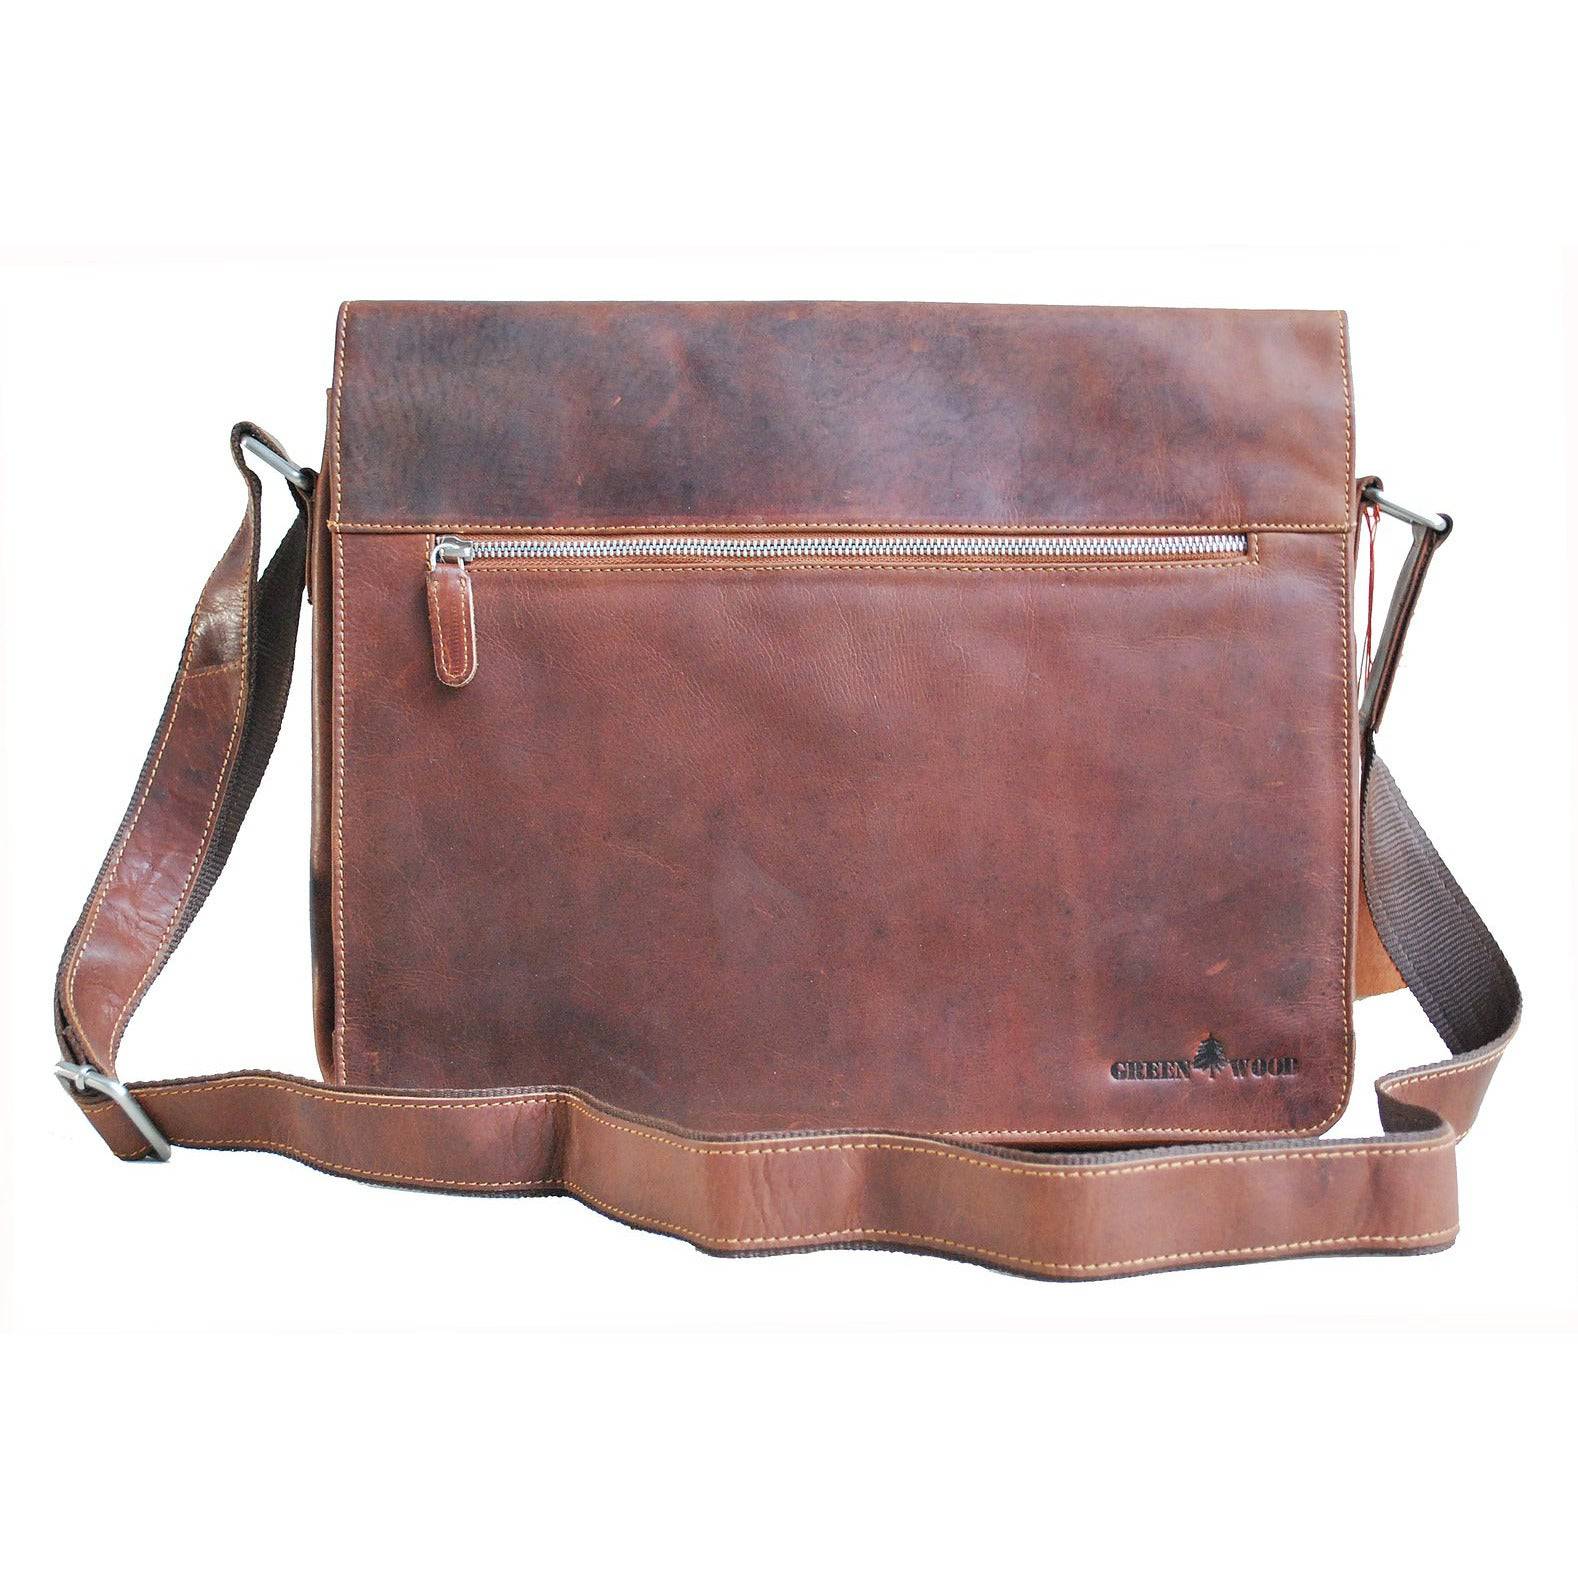 Buy VILL OKSE Tan Genuine Leather Executive Formal Office Bag | Shoulder Laptop  Messenger Bag For Men | MacBook|NoteBook Upto 16 Inch| Crossbody Handbags  with Shoulder Straps | 2 Main Compartment Online